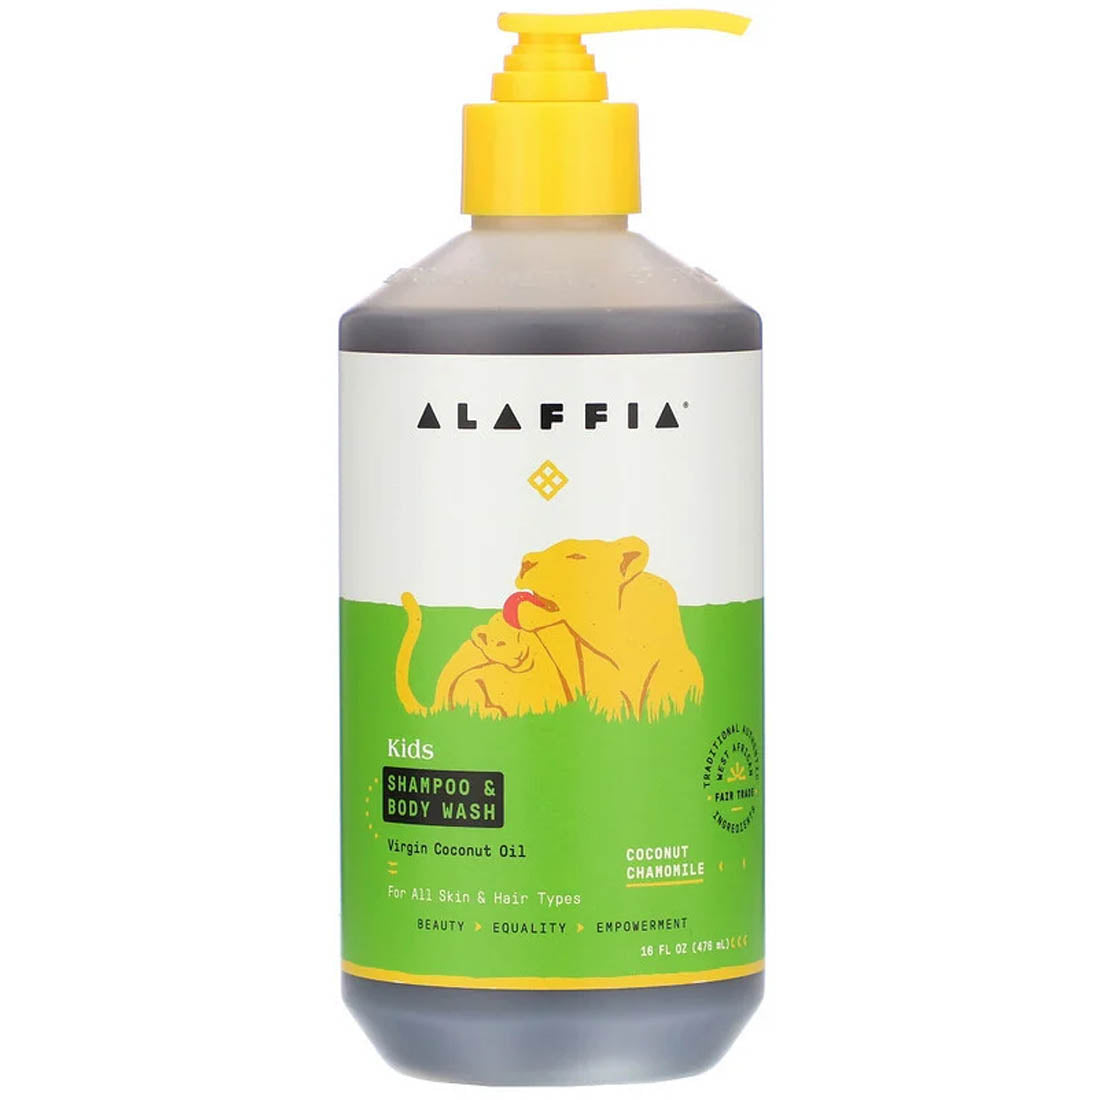 Alaffia Baby and Kids Shampoo and Body Wash, 476ml